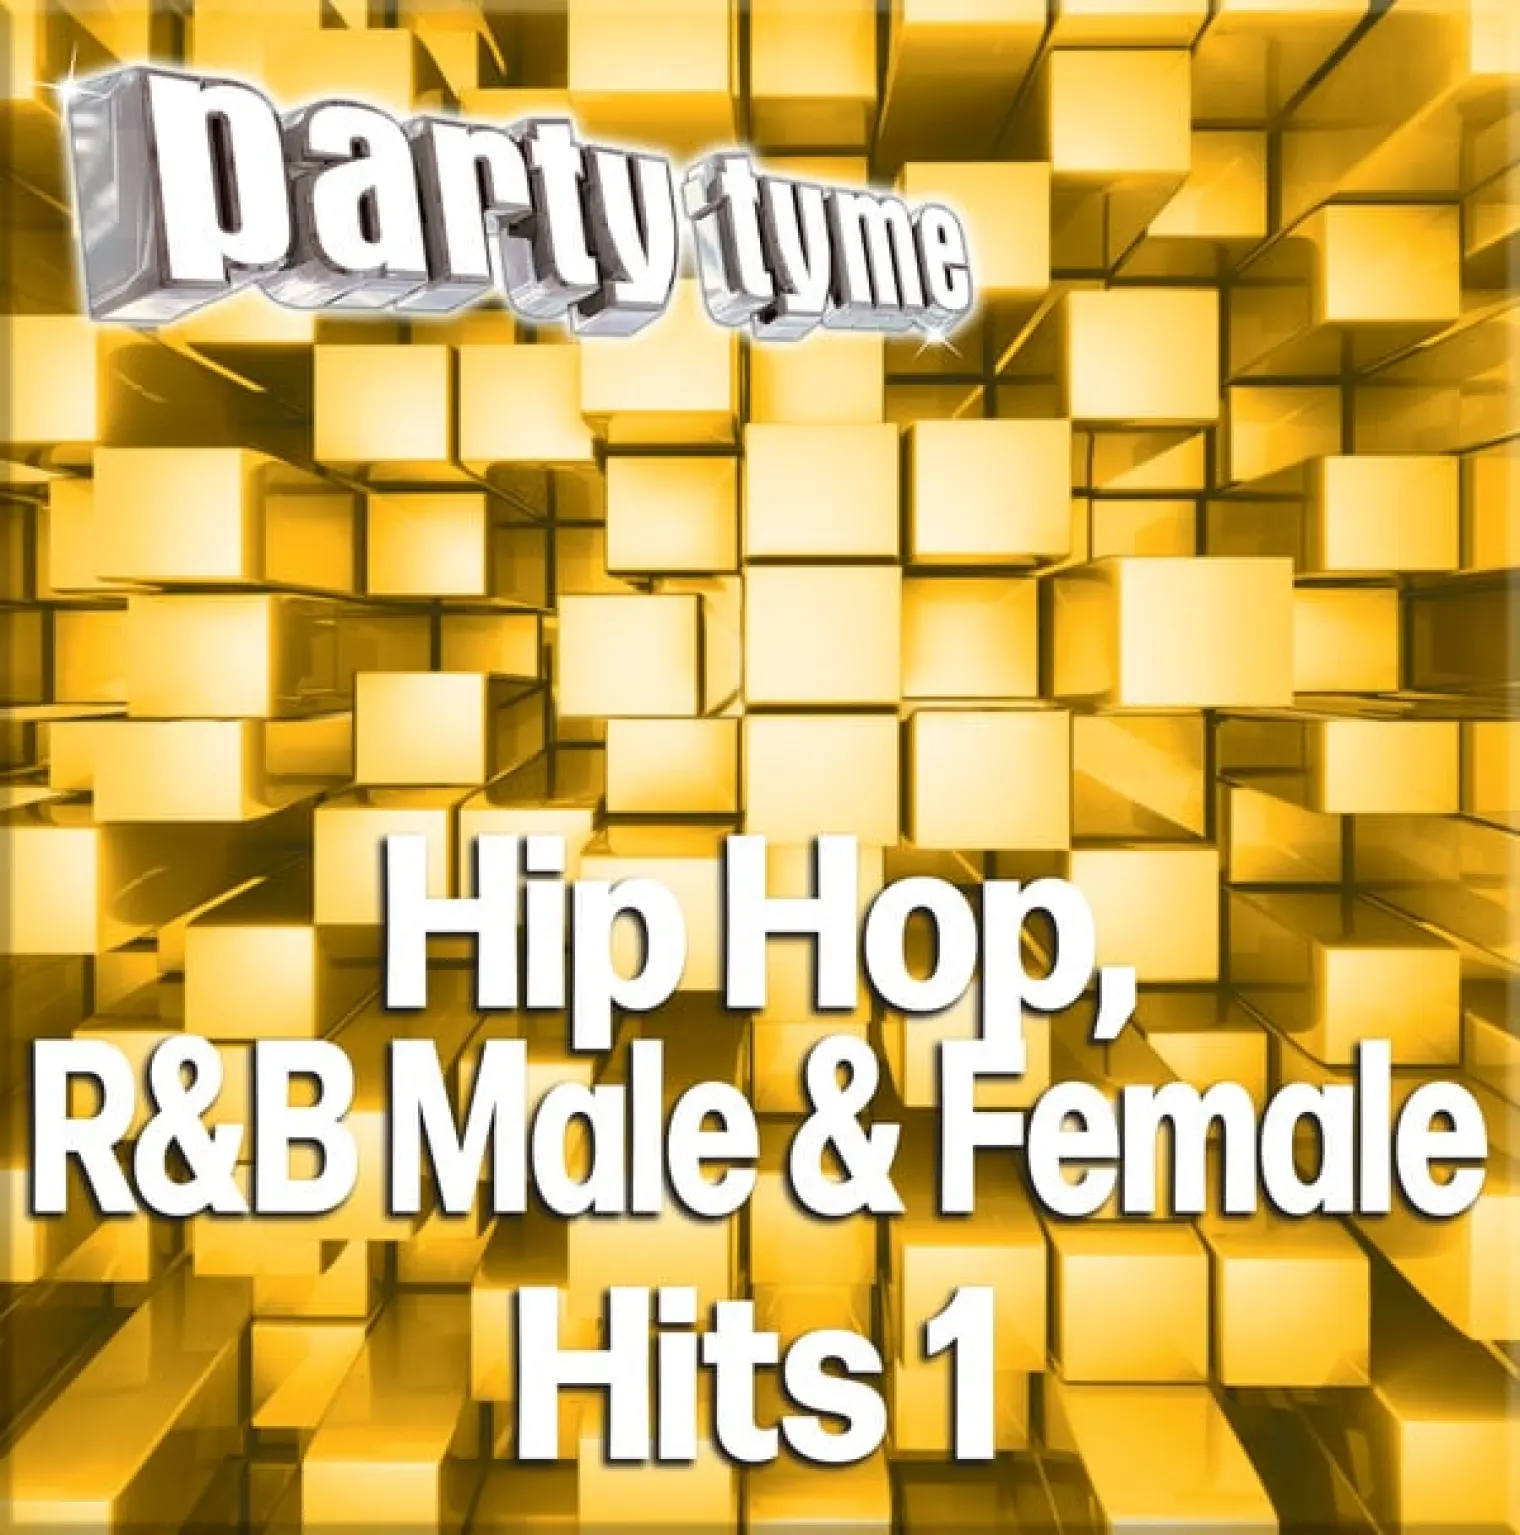 Party Tyme - Hip Hop, R&B Male & Female Hits 1 -  Party Tyme Karaoke 